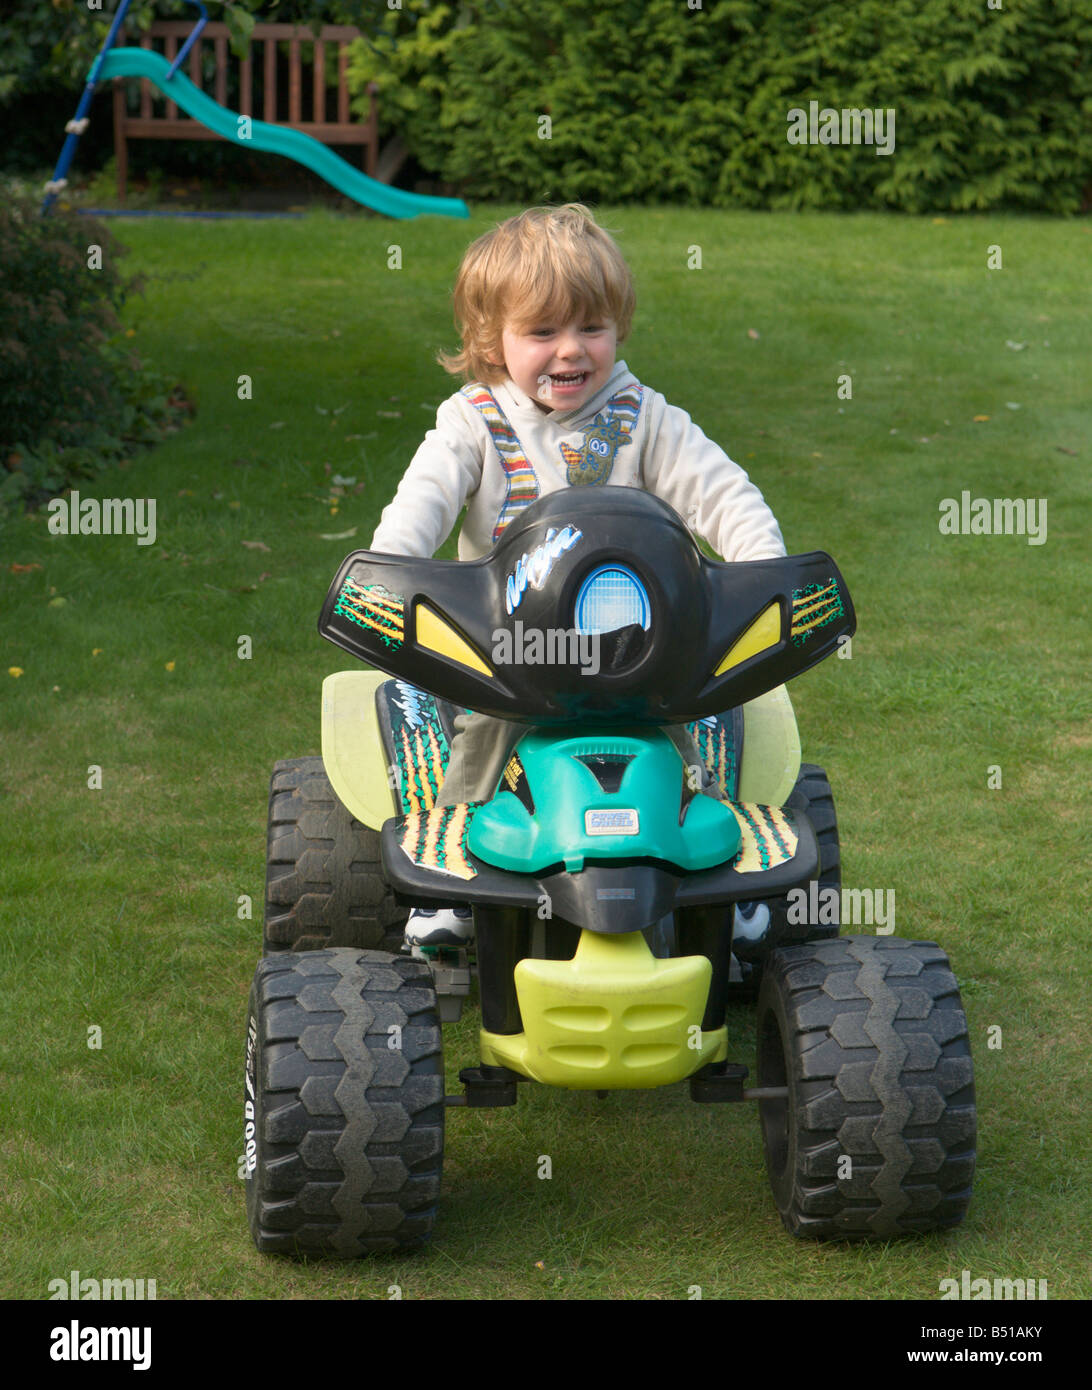 young child, boy, driving a child's quad bike machine in garden, three year old boy, UK Stock Photo